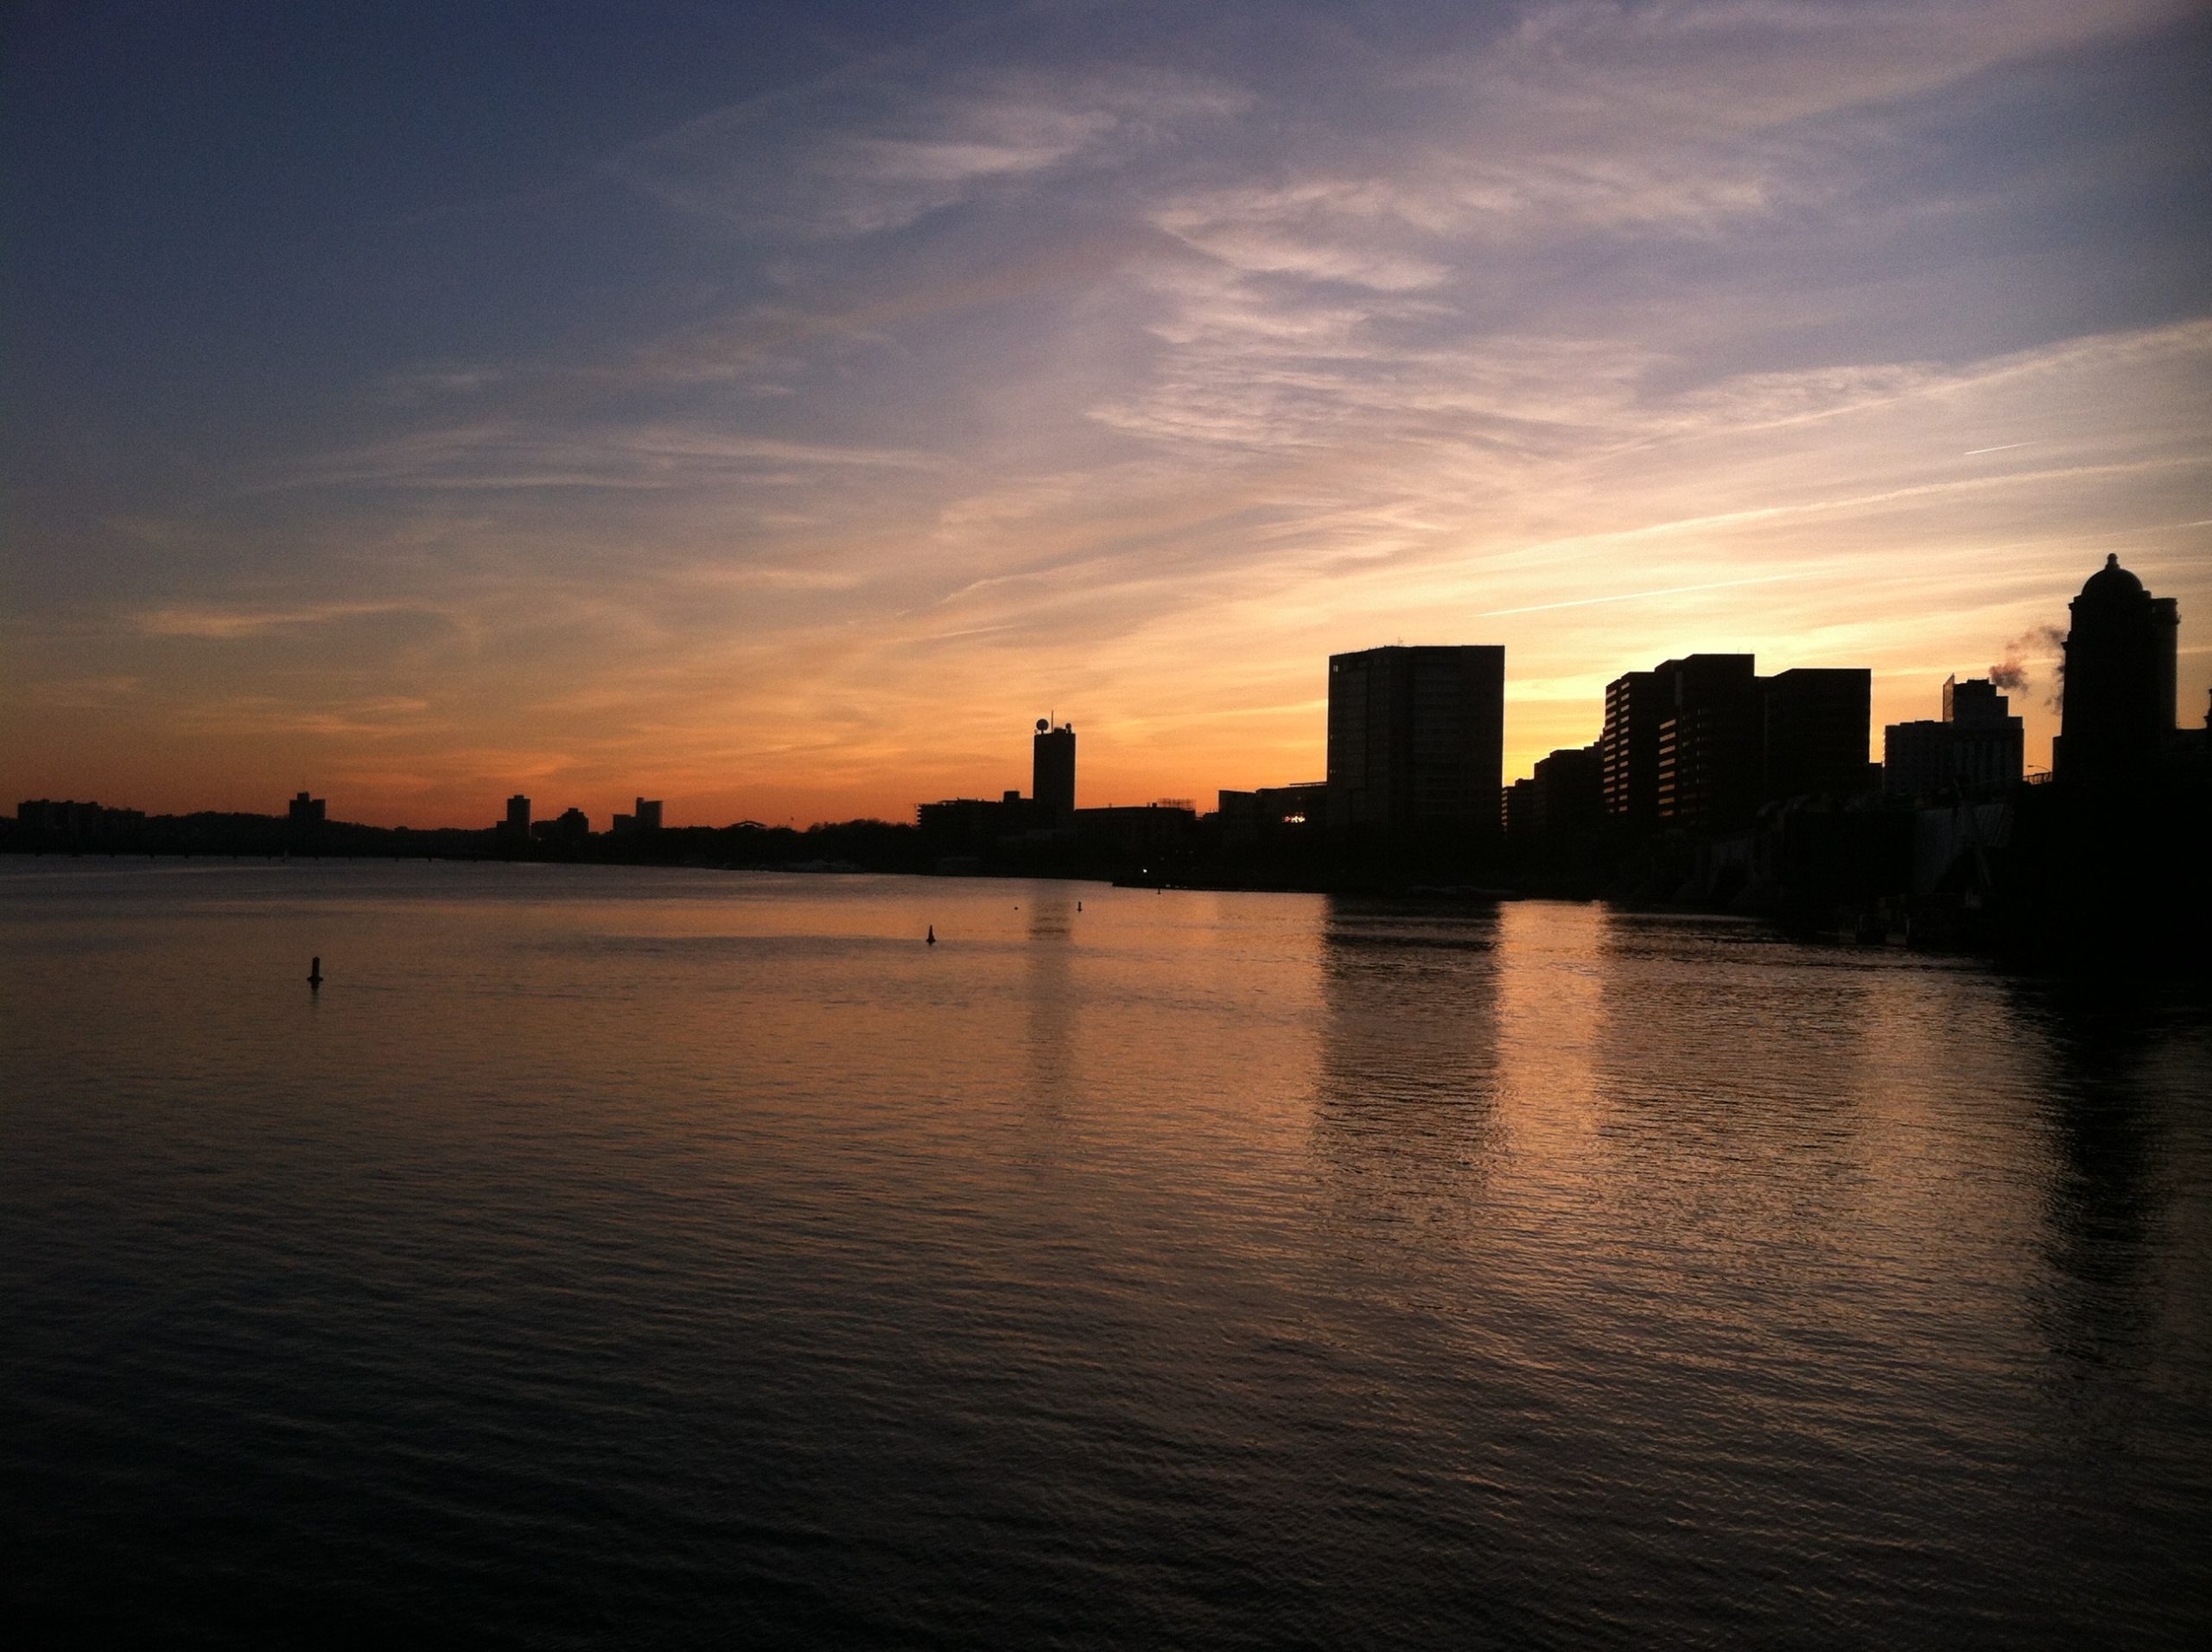 city of boston skyline and bay